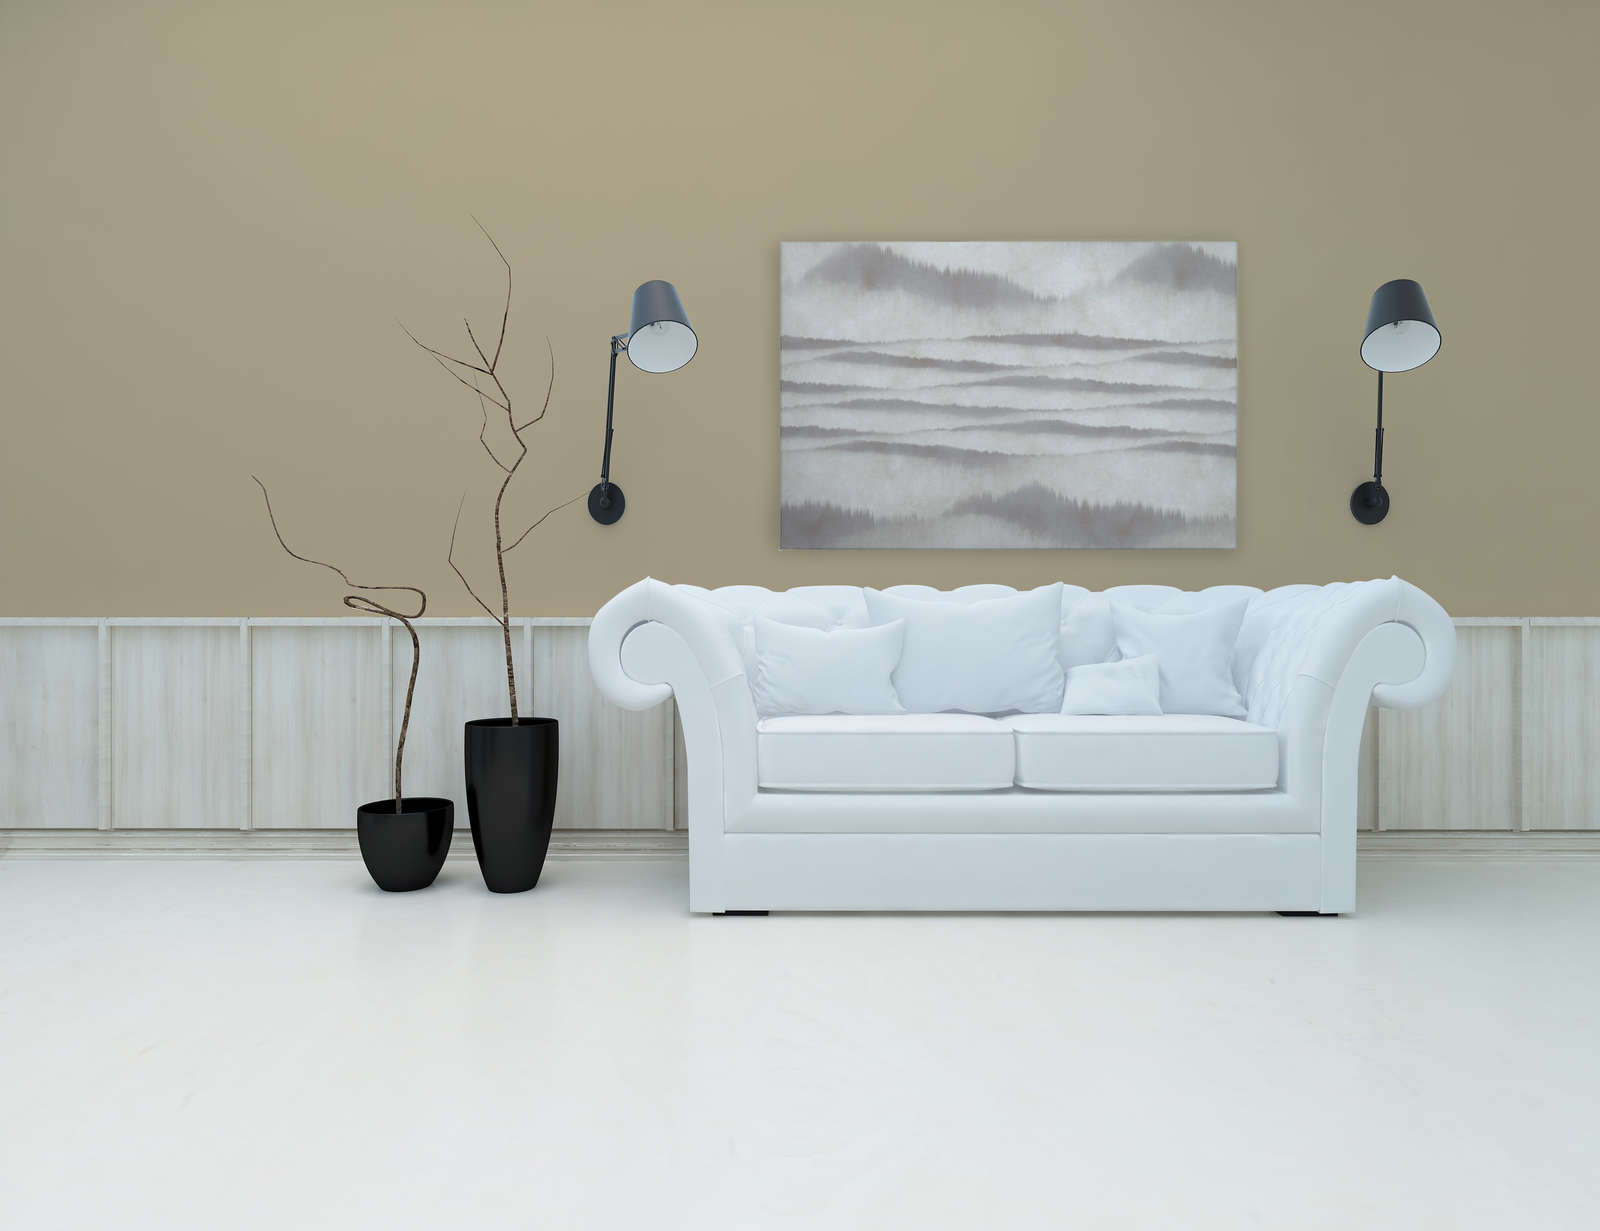             Canvas schilderij abstract patroon golven | wit, grijs - 1,20 m x 0,80 m
        